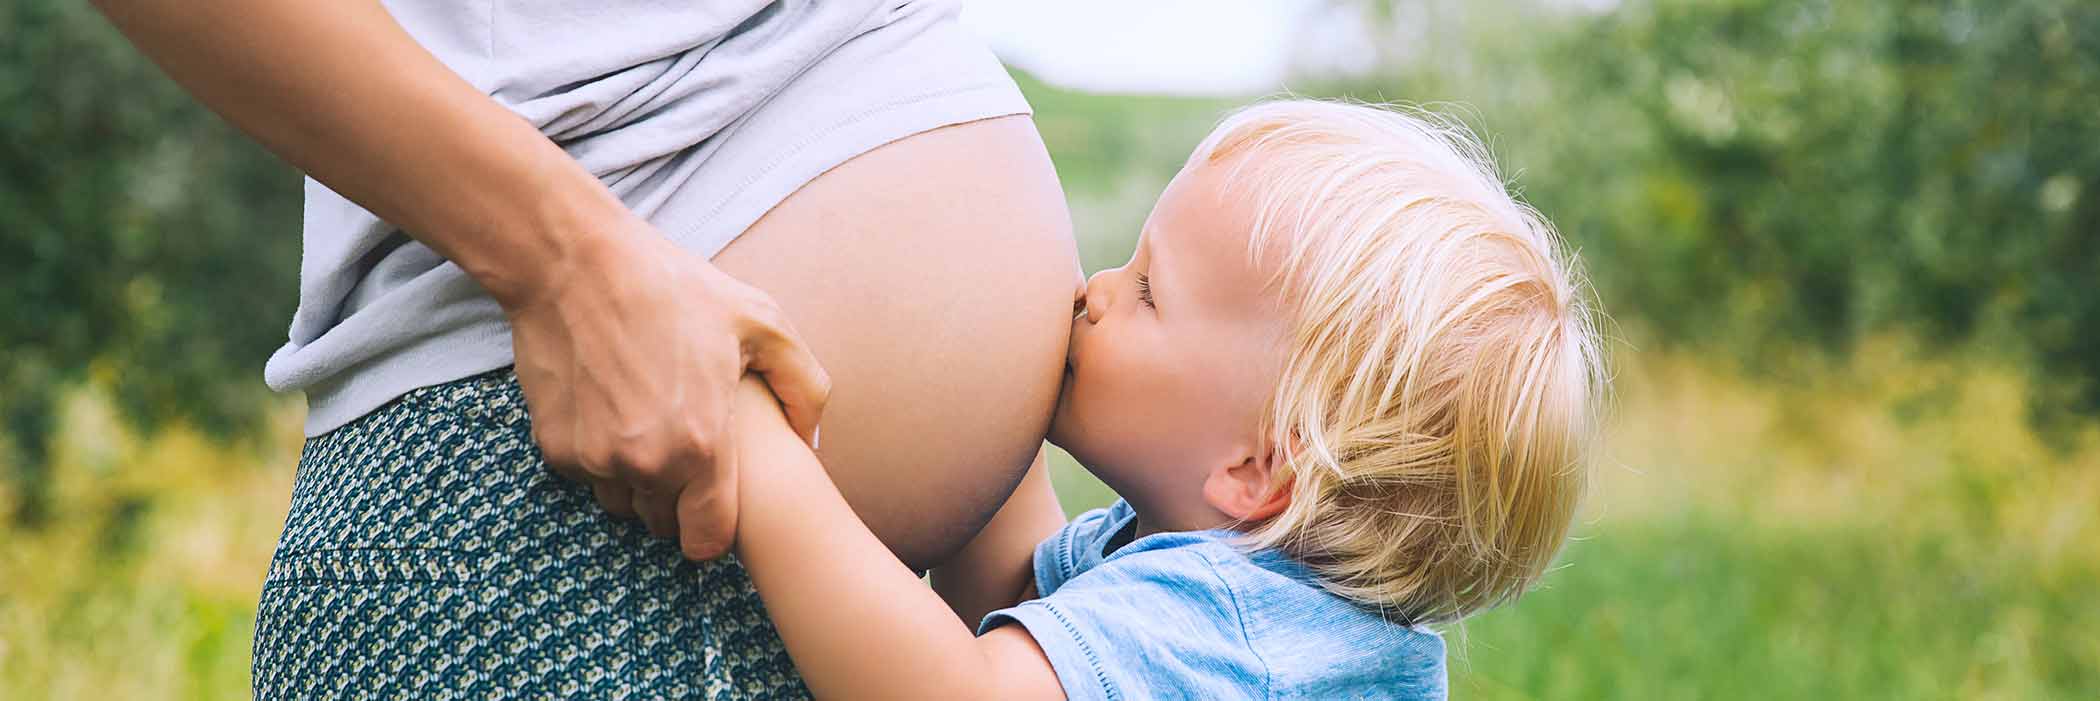 Fertility treatment with Cryos donor sperm at Vitanova Fertility Clinic